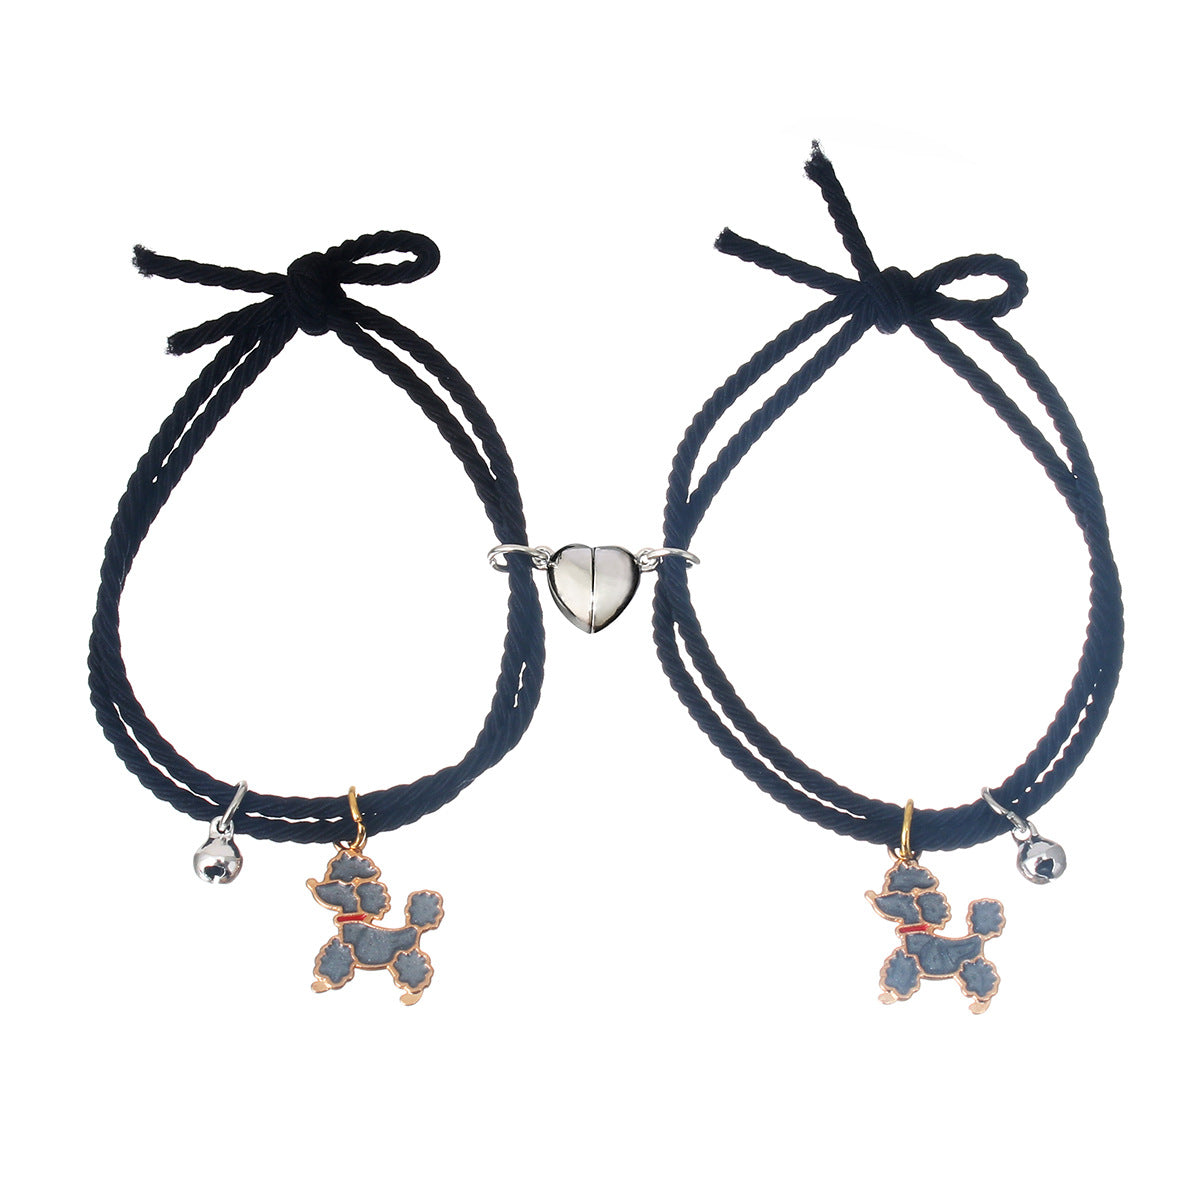 Cartoon Style Dog Mixed Materials Handmade Unisex Bracelets